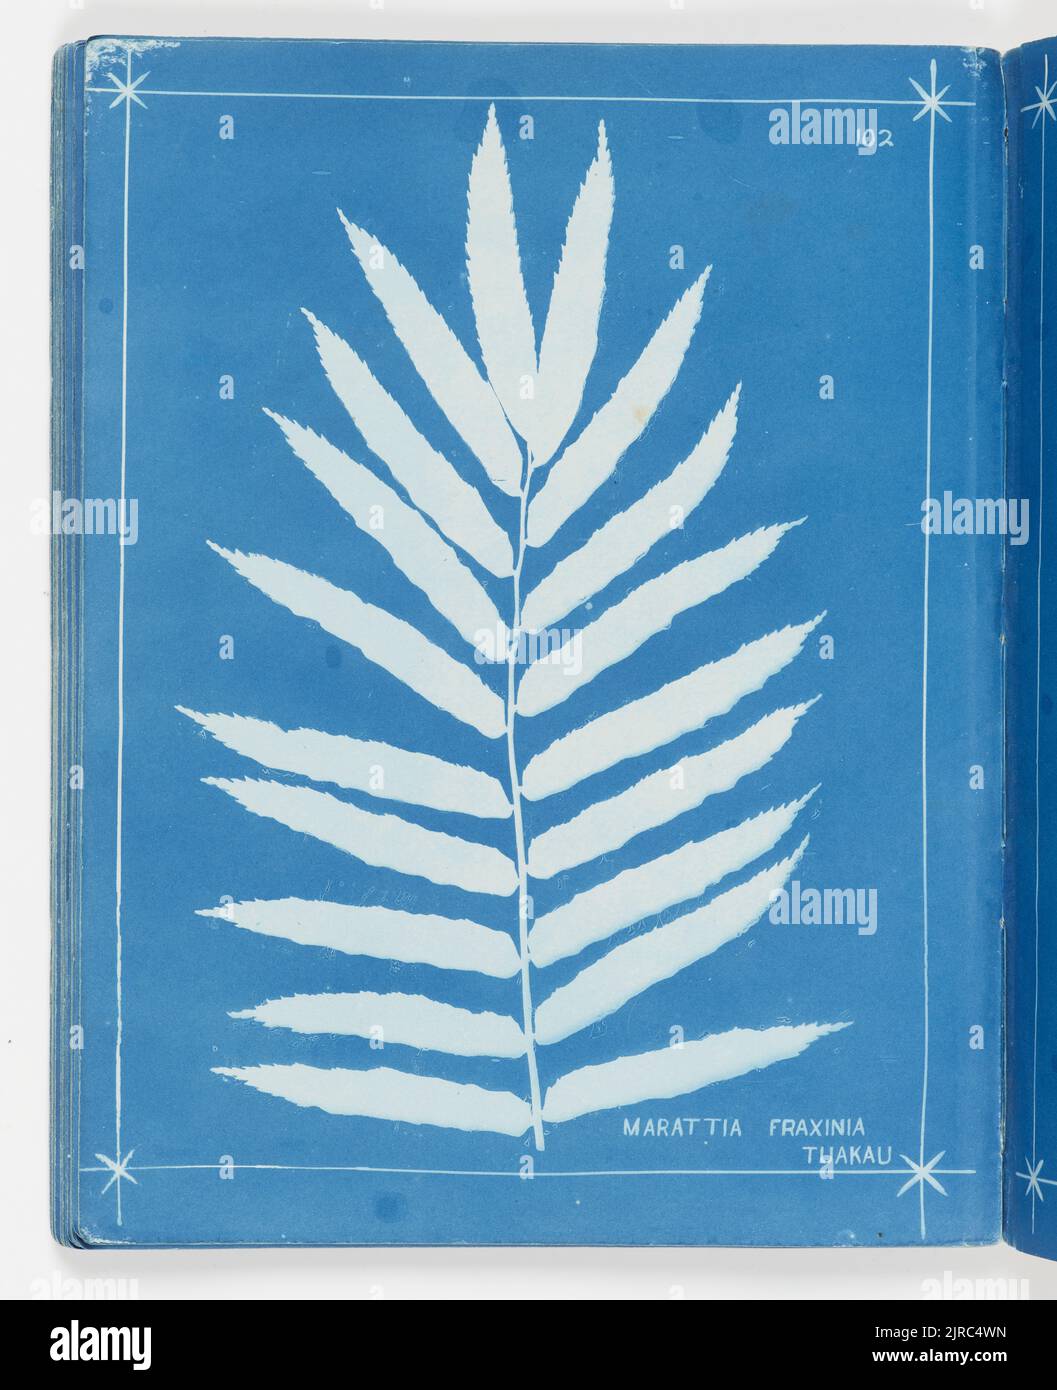 Marattia fraxinia, Tuakau. From the album: New Zealand ferns,148 varieties, 1880, Auckland, by Herbert Dobbie. Stock Photo